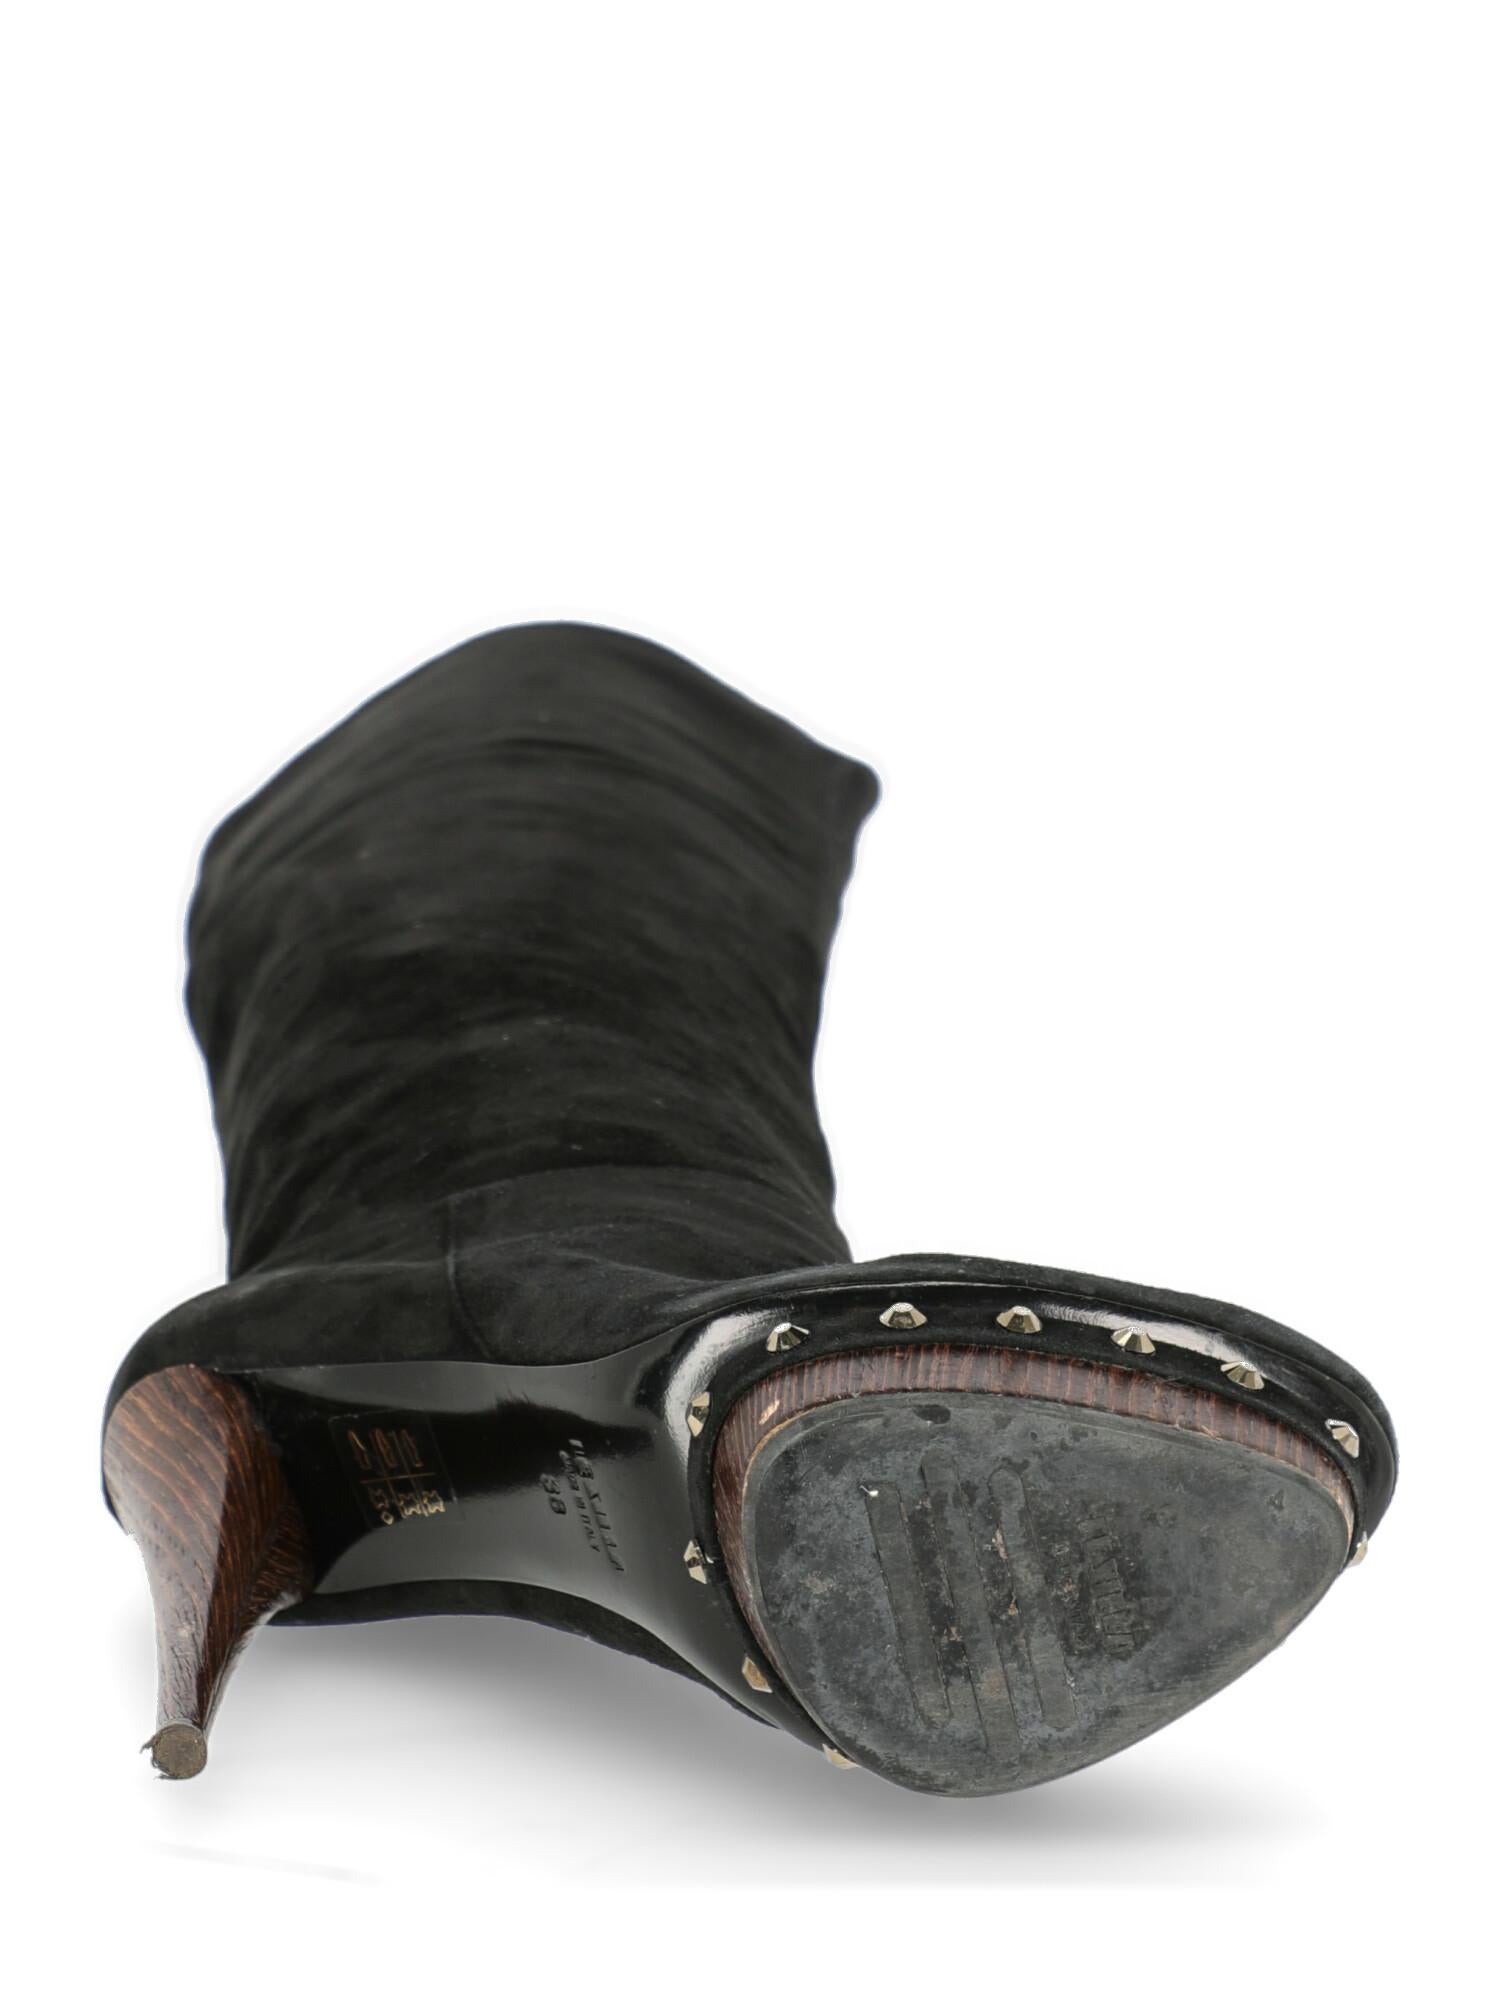 Le Silla Woman Boots Black IT 38 1